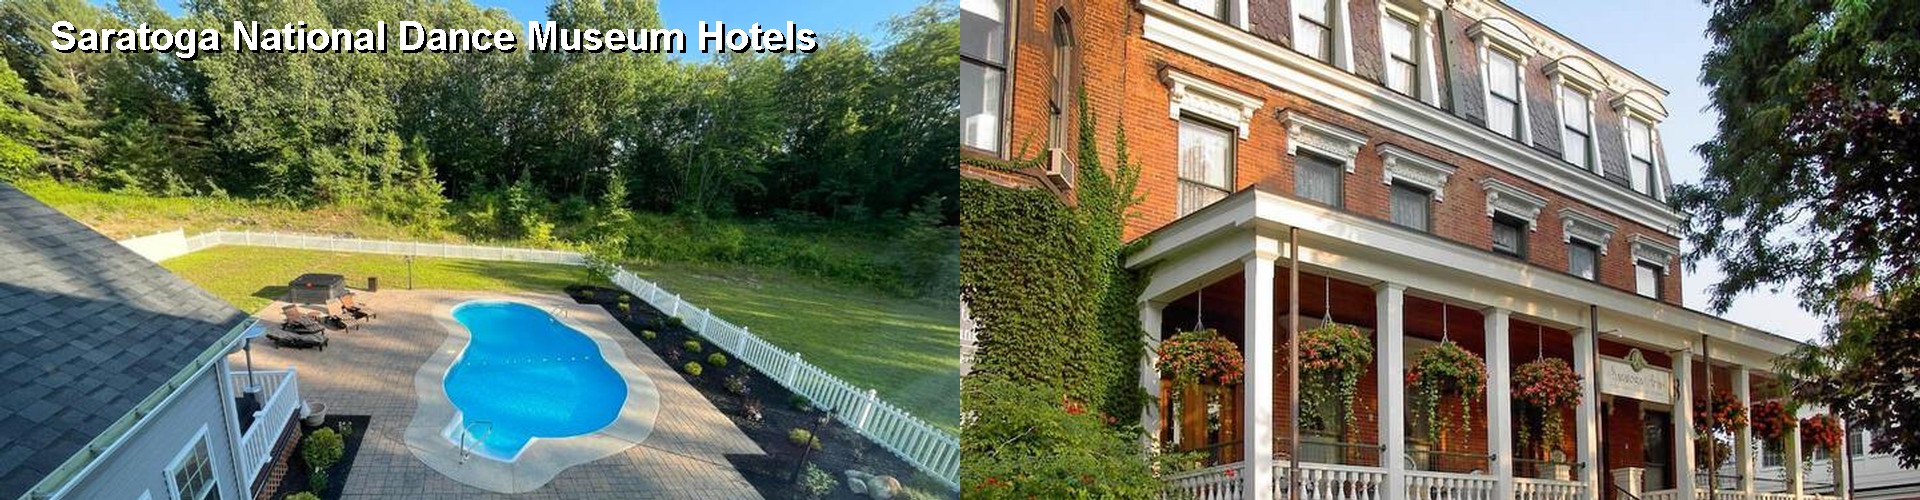 5 Best Hotels near Saratoga National Dance Museum